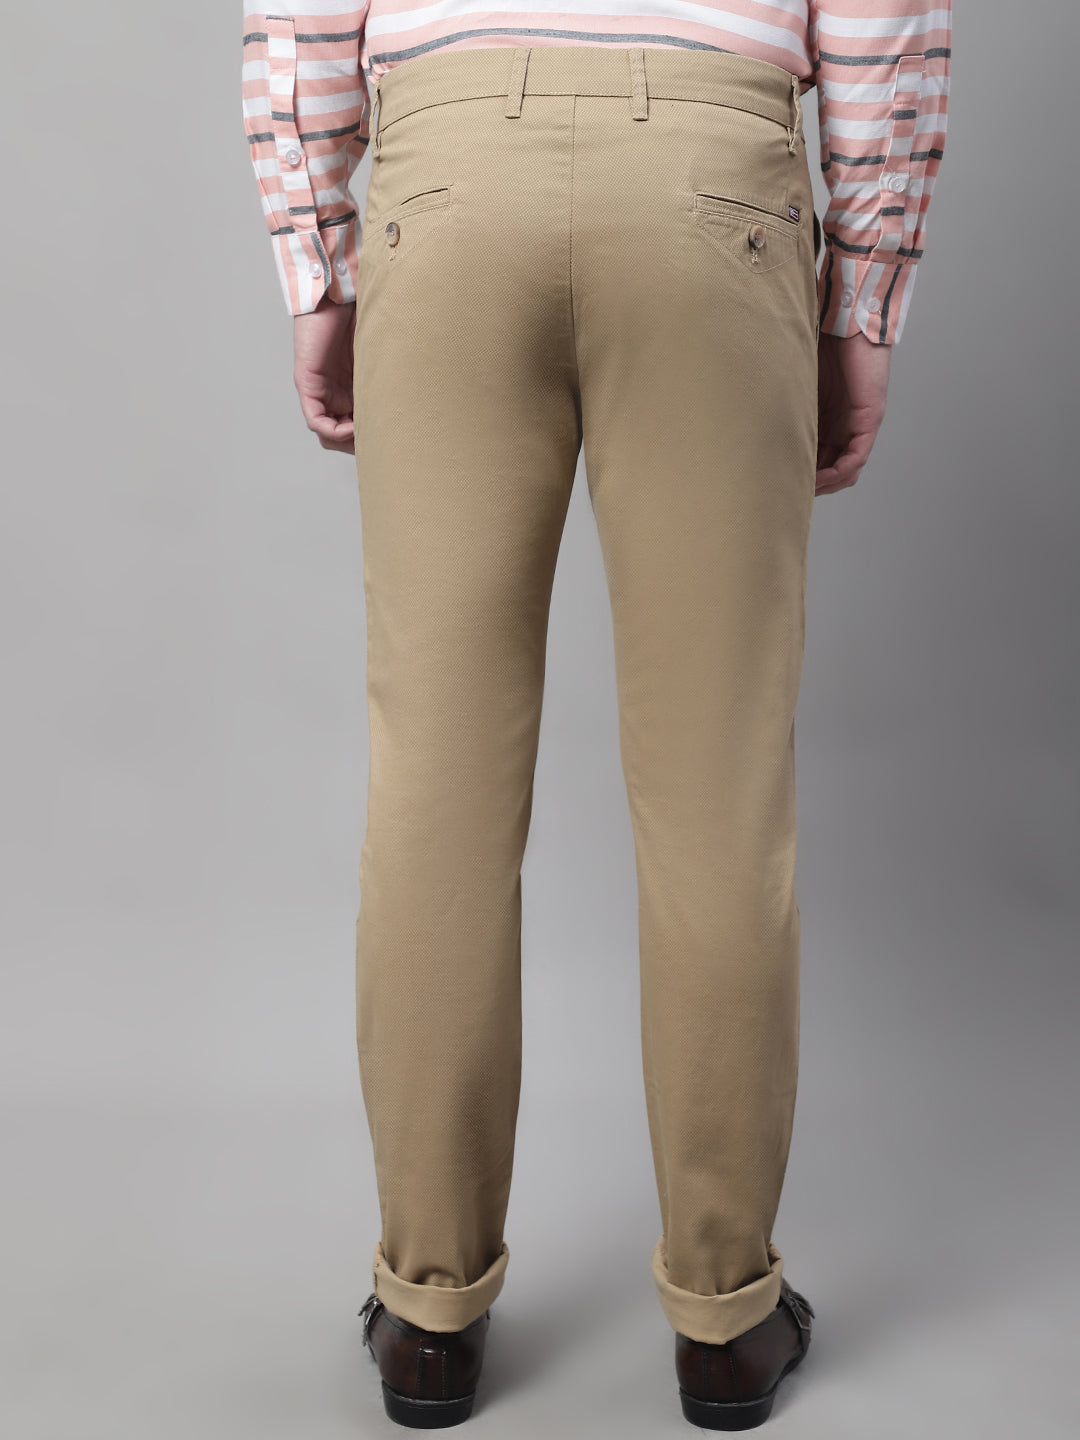 Buy Cantabil Men Khaki Cotton Regular Fit Casual Trouser  (MTRC00040_Khaki_32) at Amazon.in